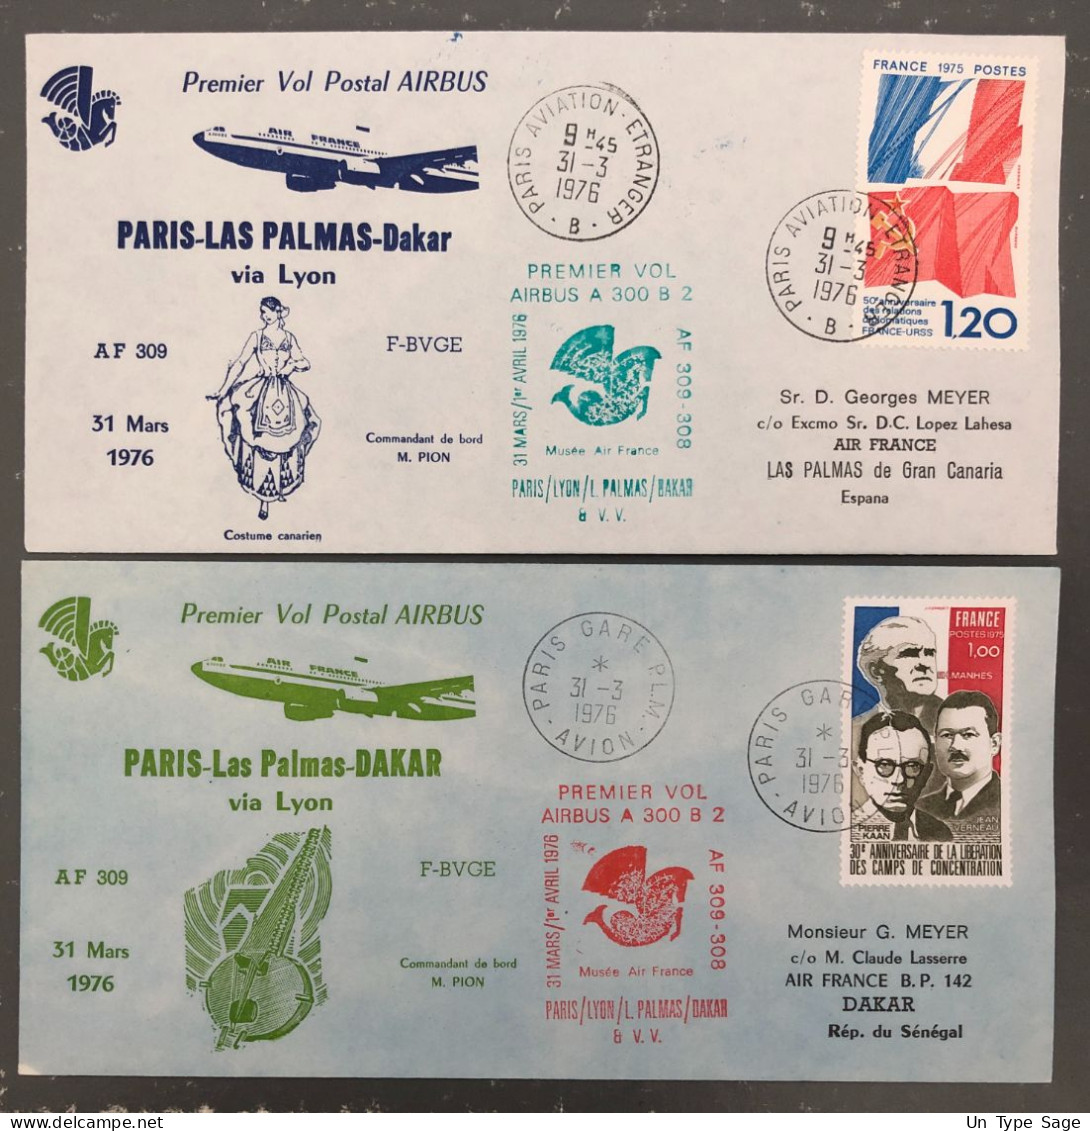 France, Premier Vol (Air France) Paris, Las Palmas, Dakar 31.3.1976 - 2 Enveloppes - (B1517) - First Flight Covers